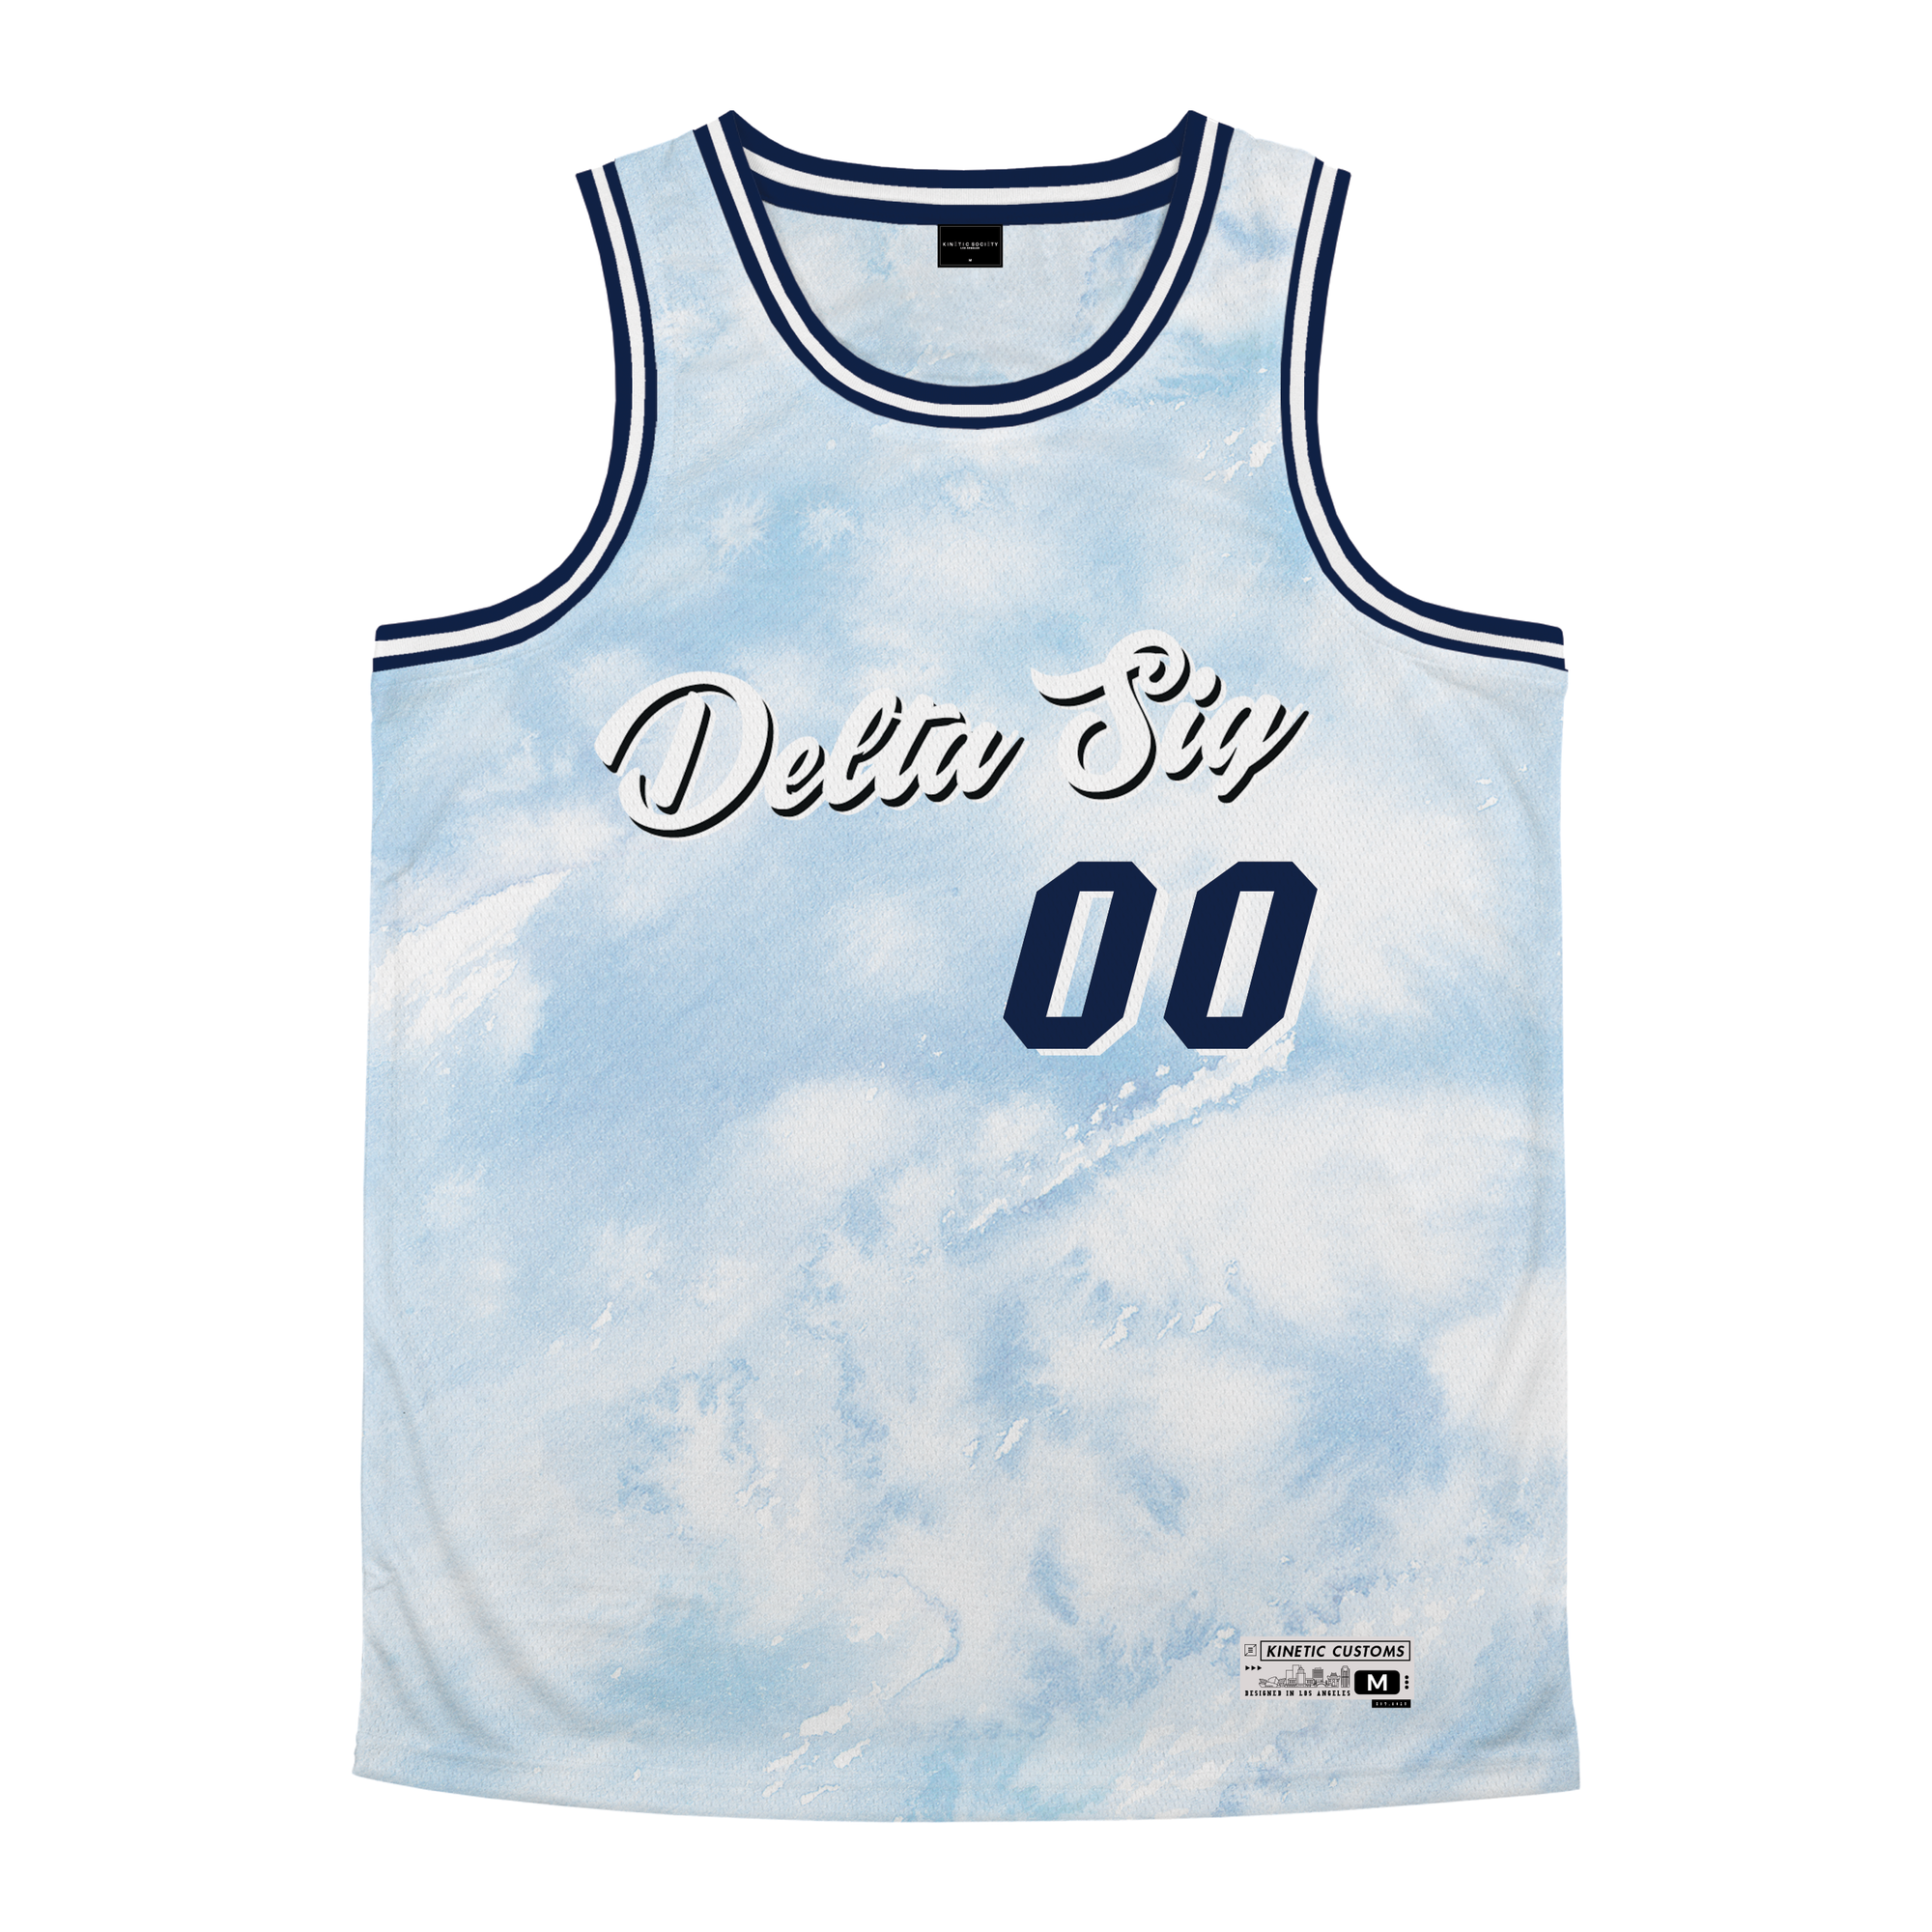 Delta Sigma Phi - Blue Sky Basketball Jersey